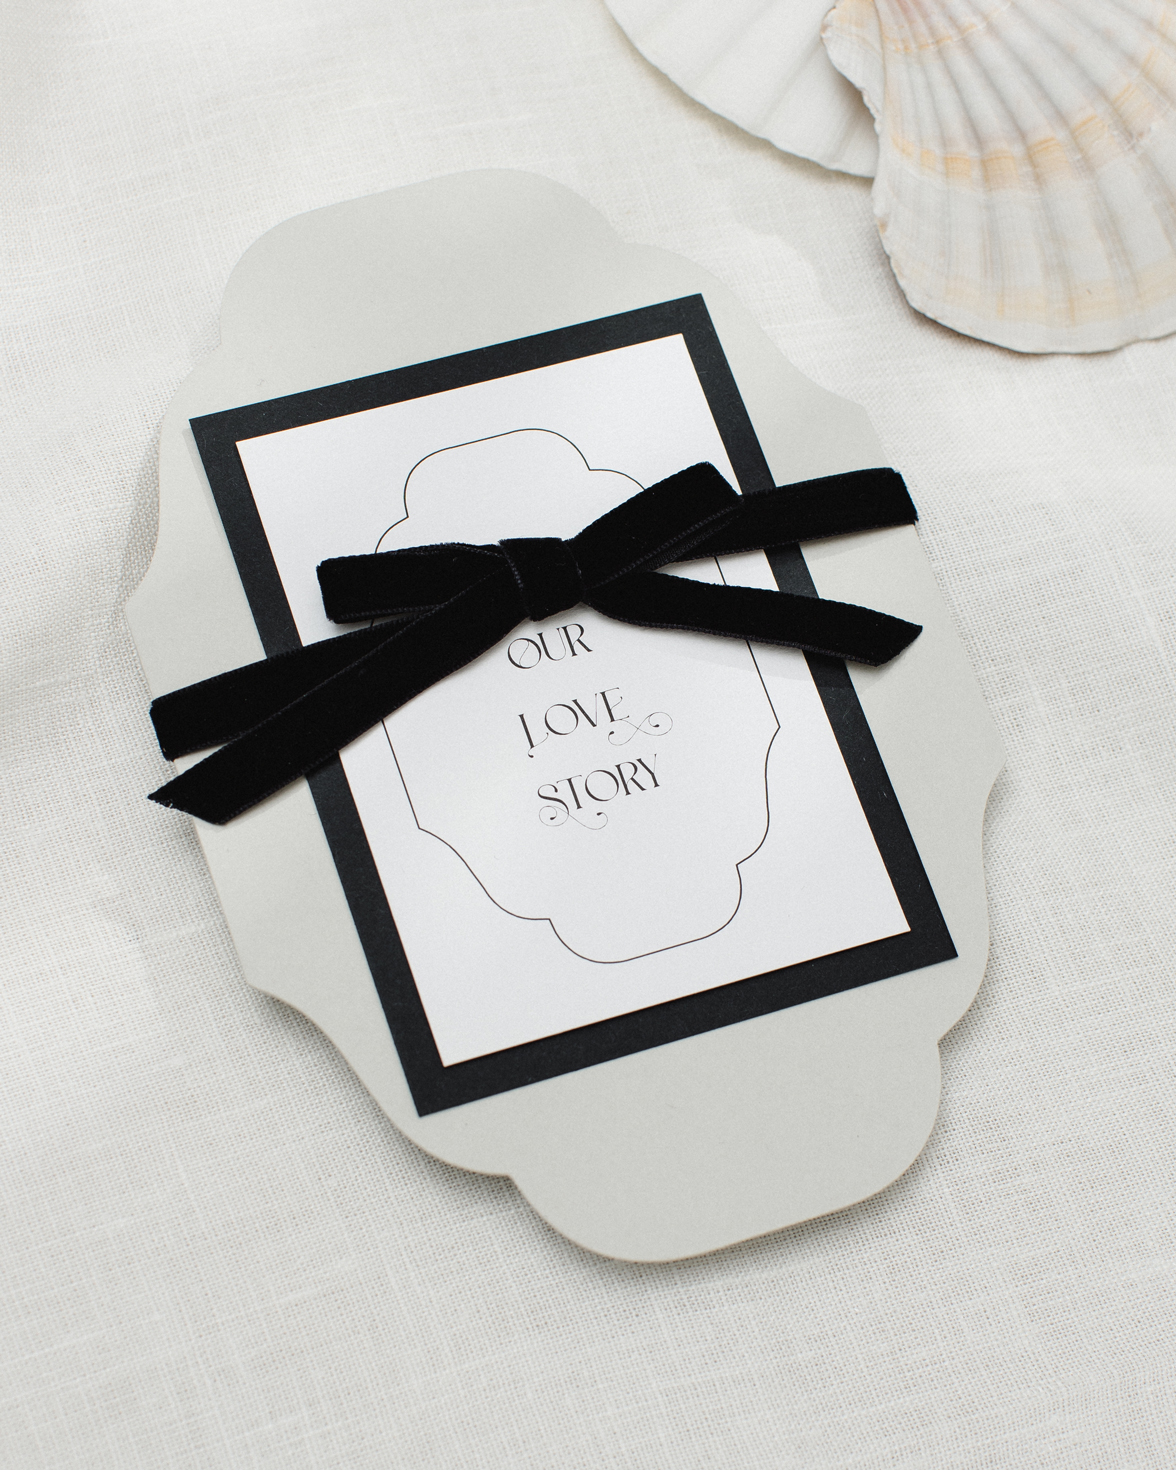 Vintage inspired cut to shape wedding invitation bundle with ornate font and black velvet bow